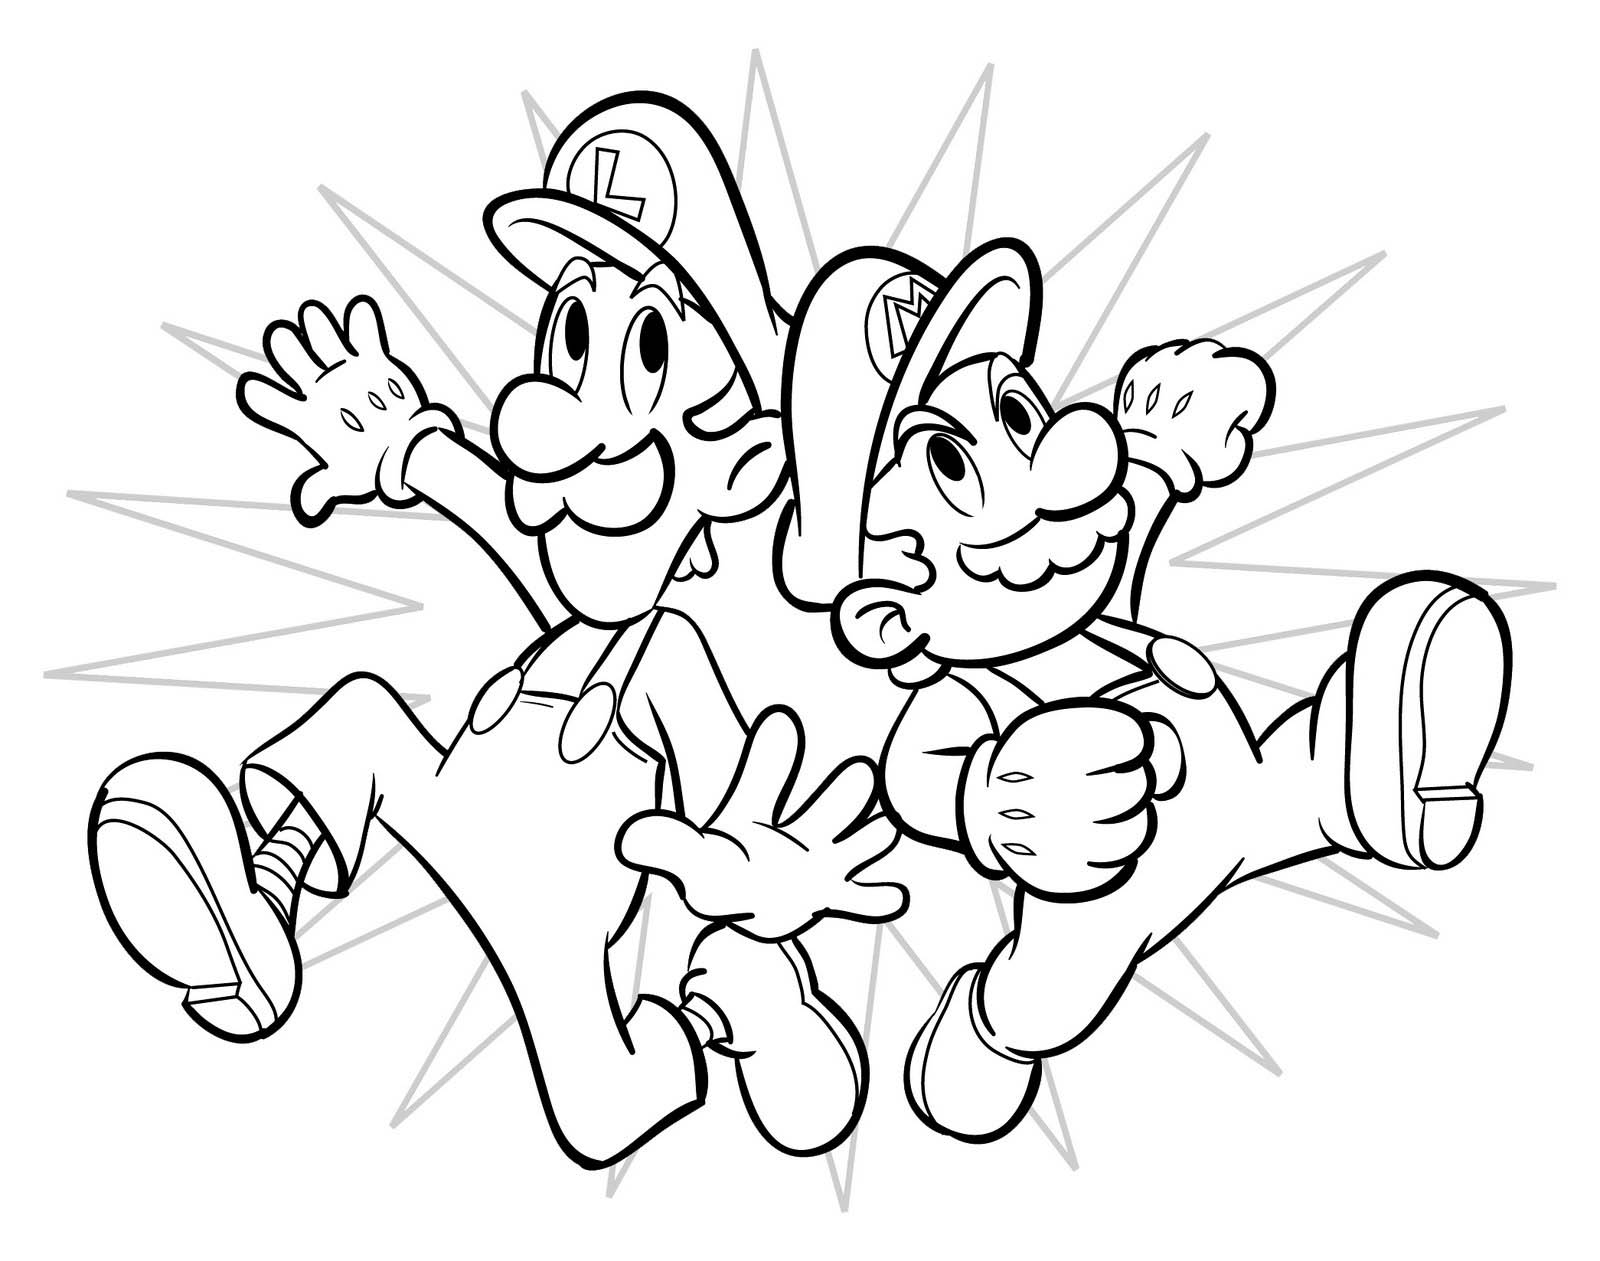 Coloring page: Mario Bros (Video Games) #112493 - Printable coloring pages